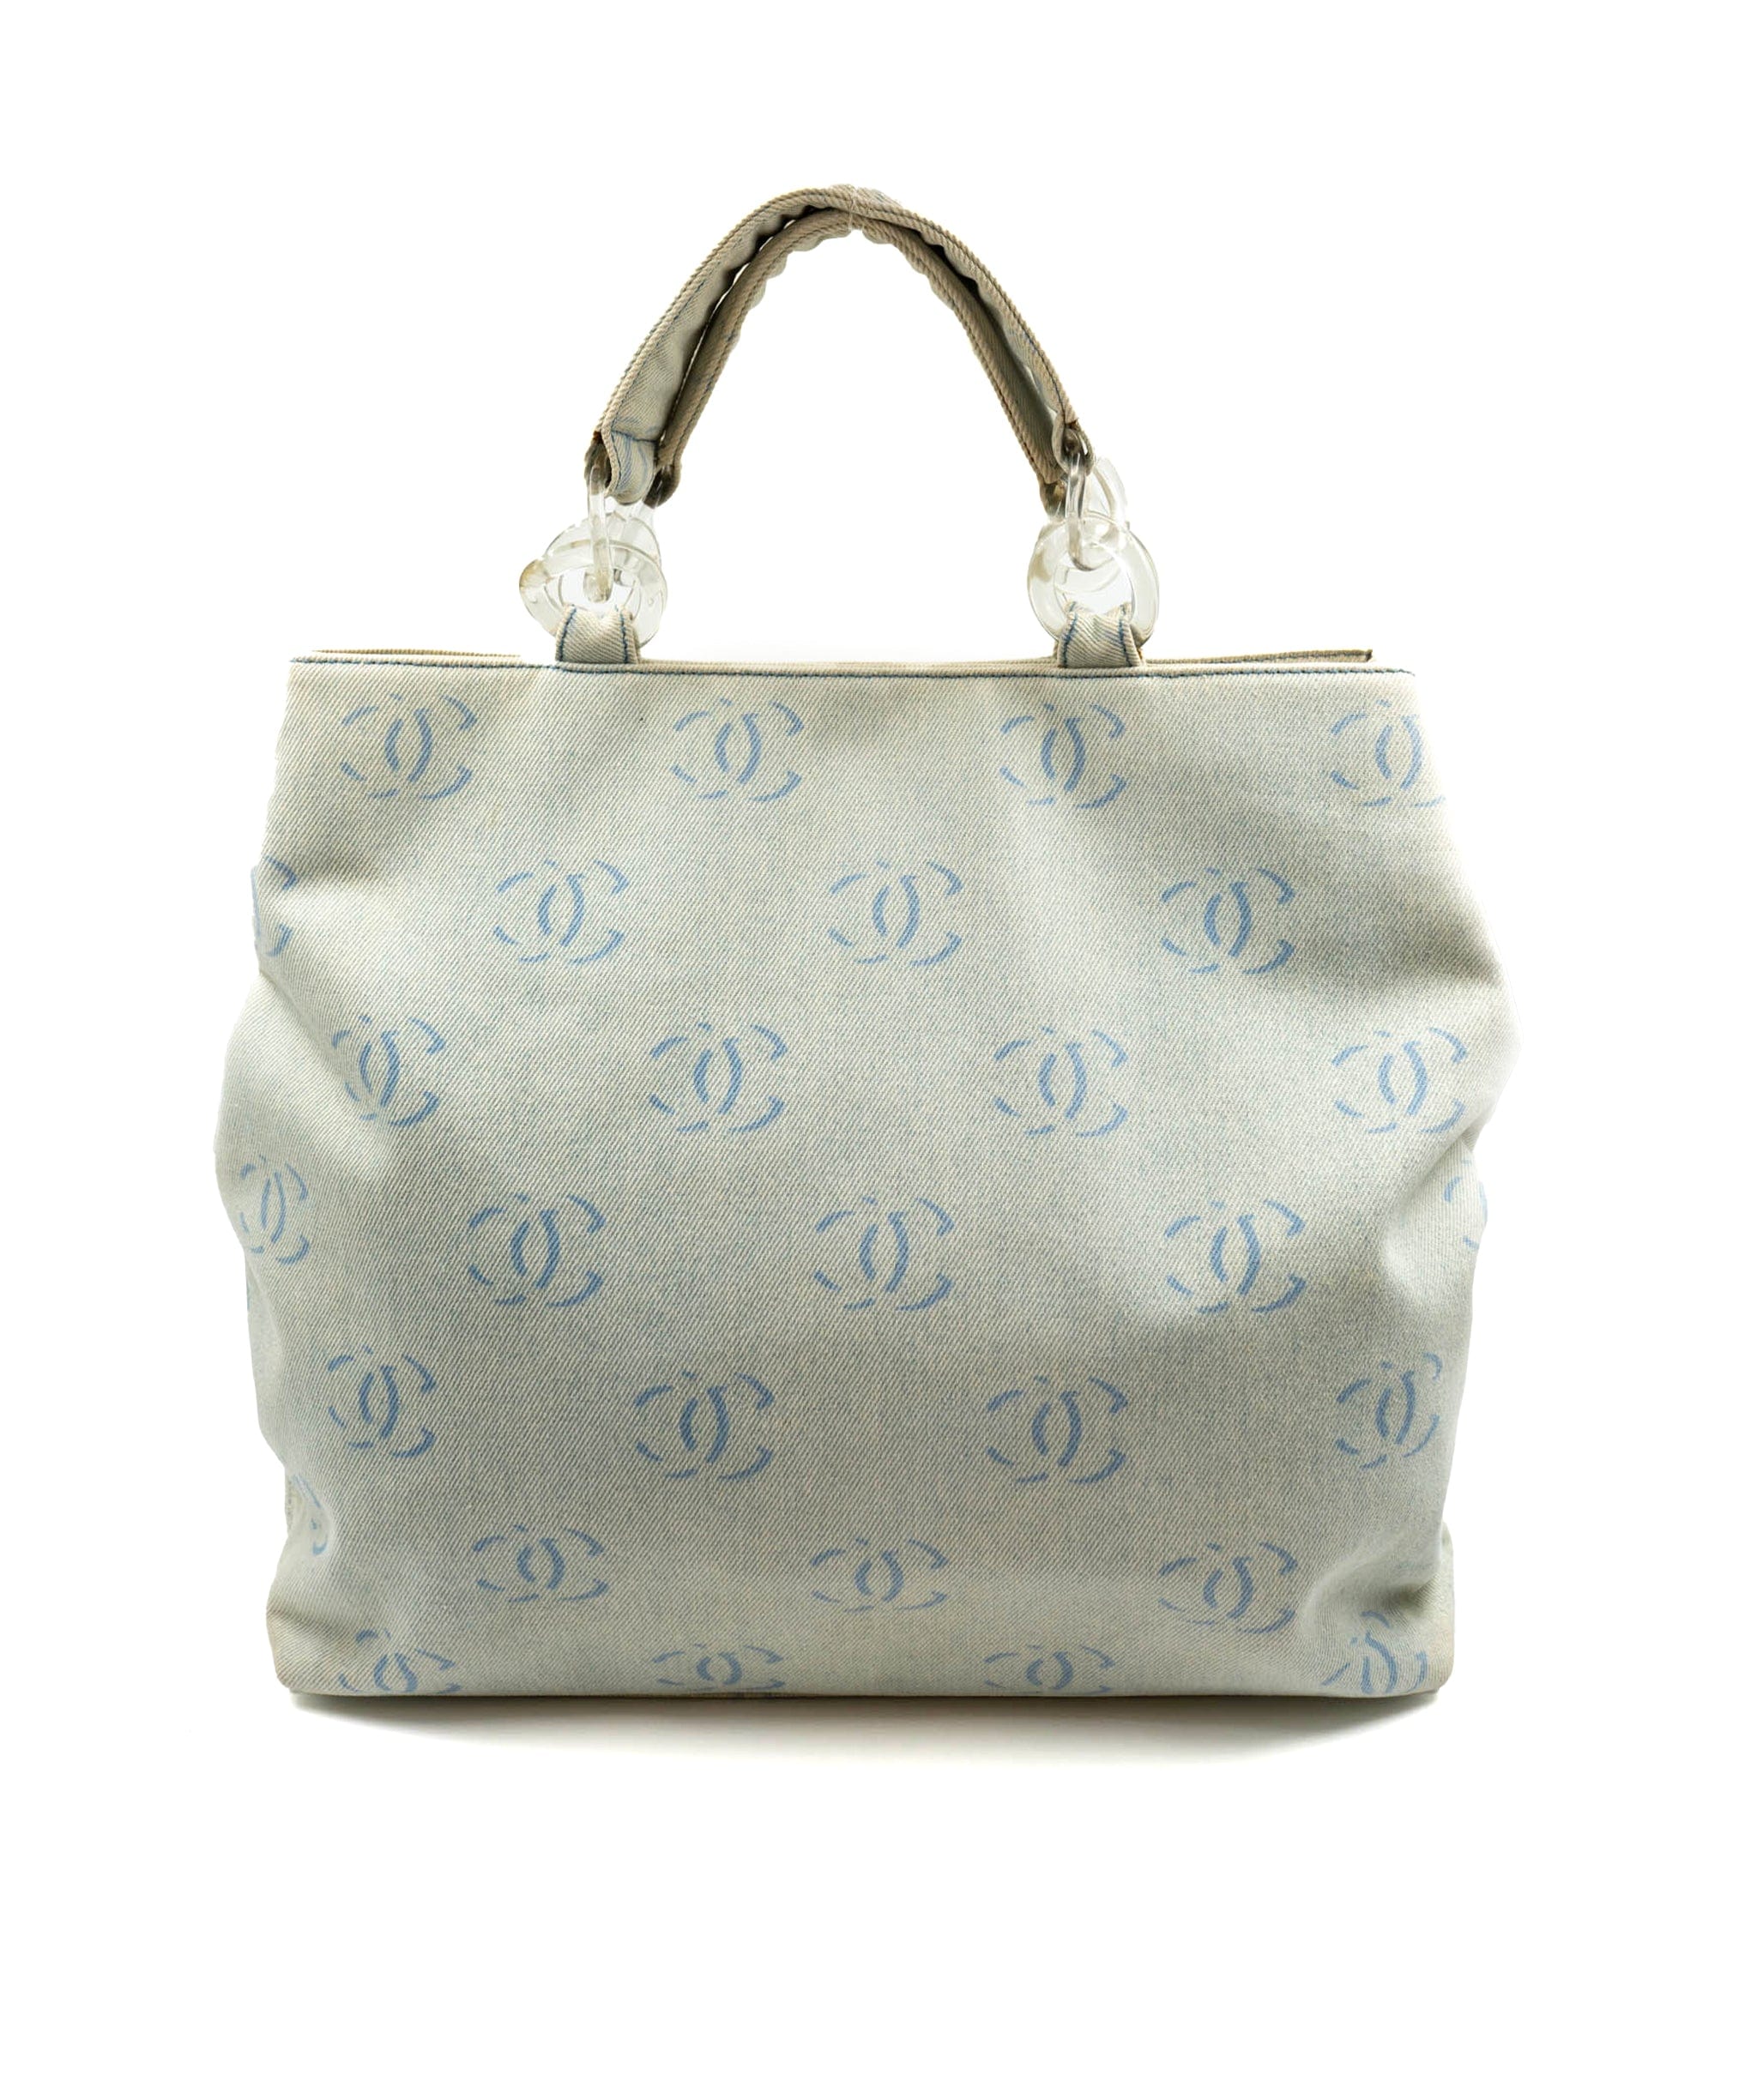 Chanel Chanel CC Denim Tote Bag Light Blue ASL4631